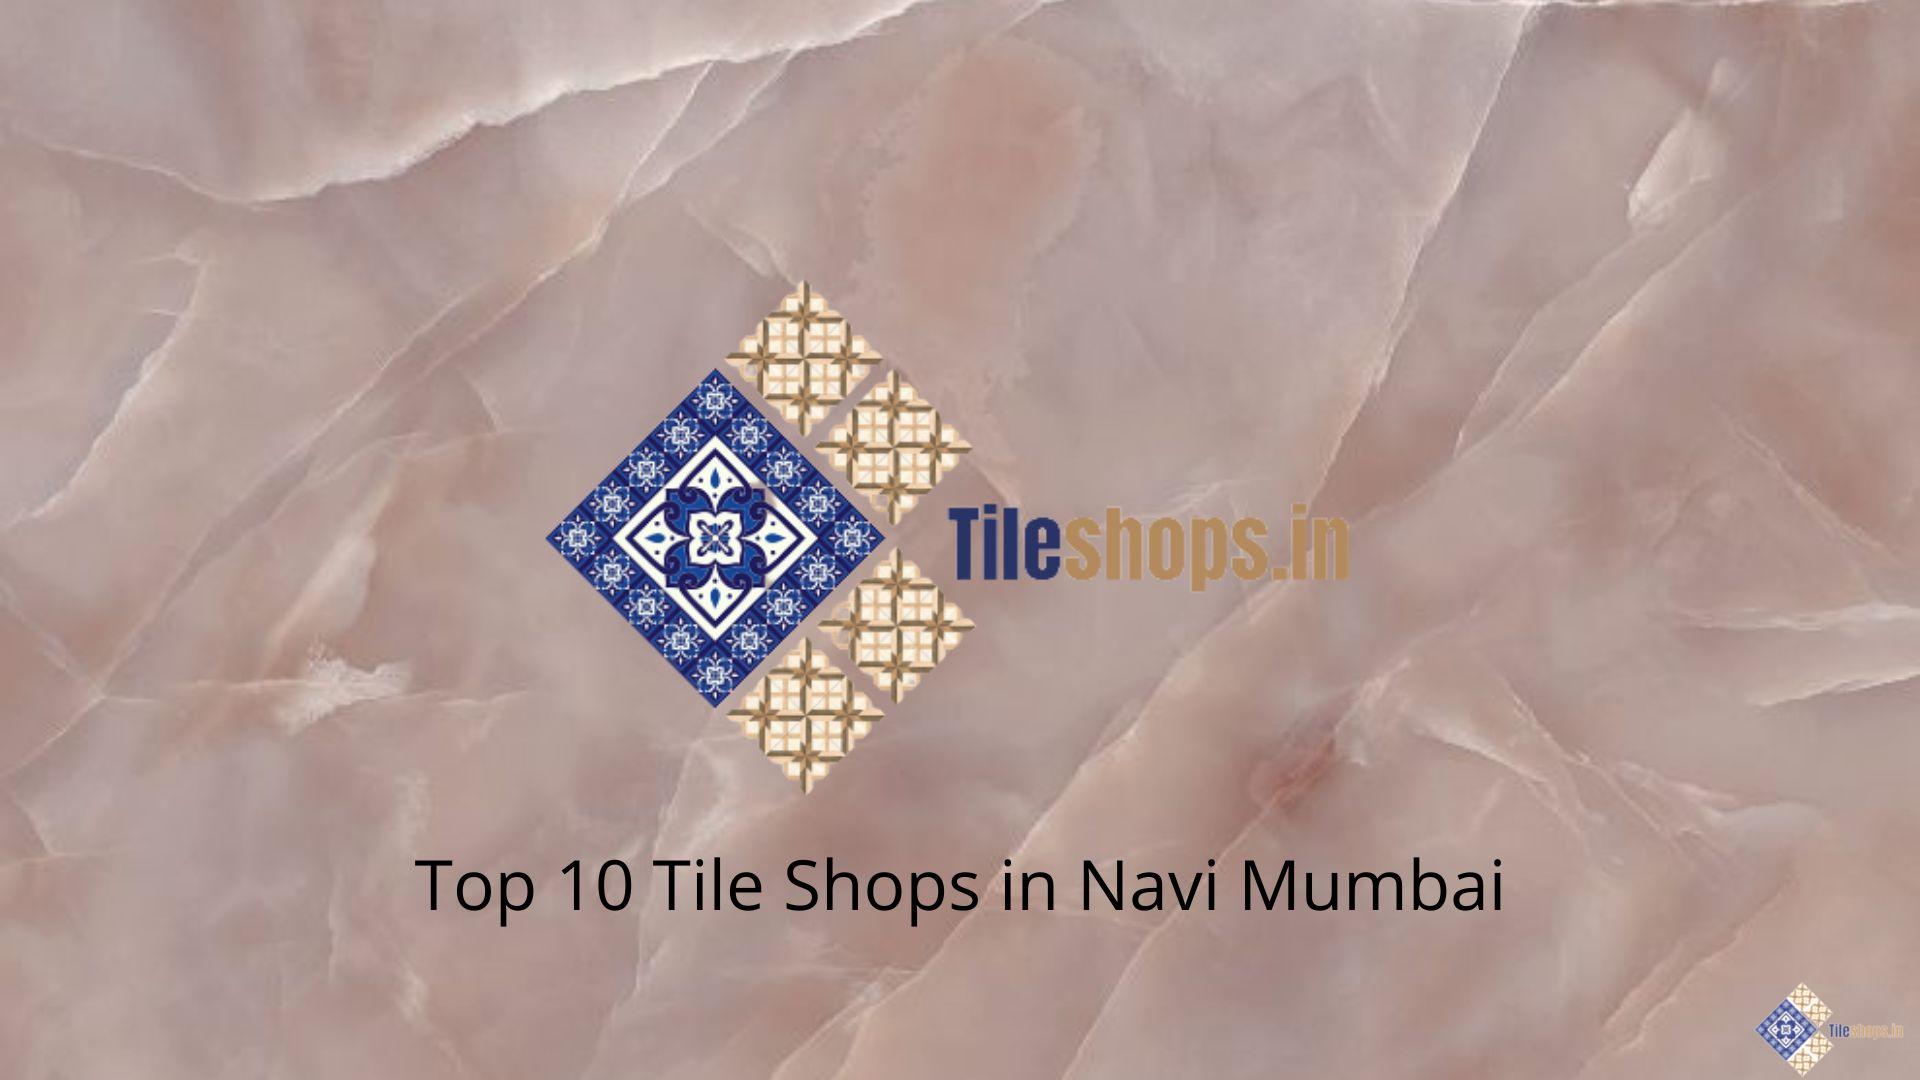 Top 10 Tile Shops in Navi Mumbai